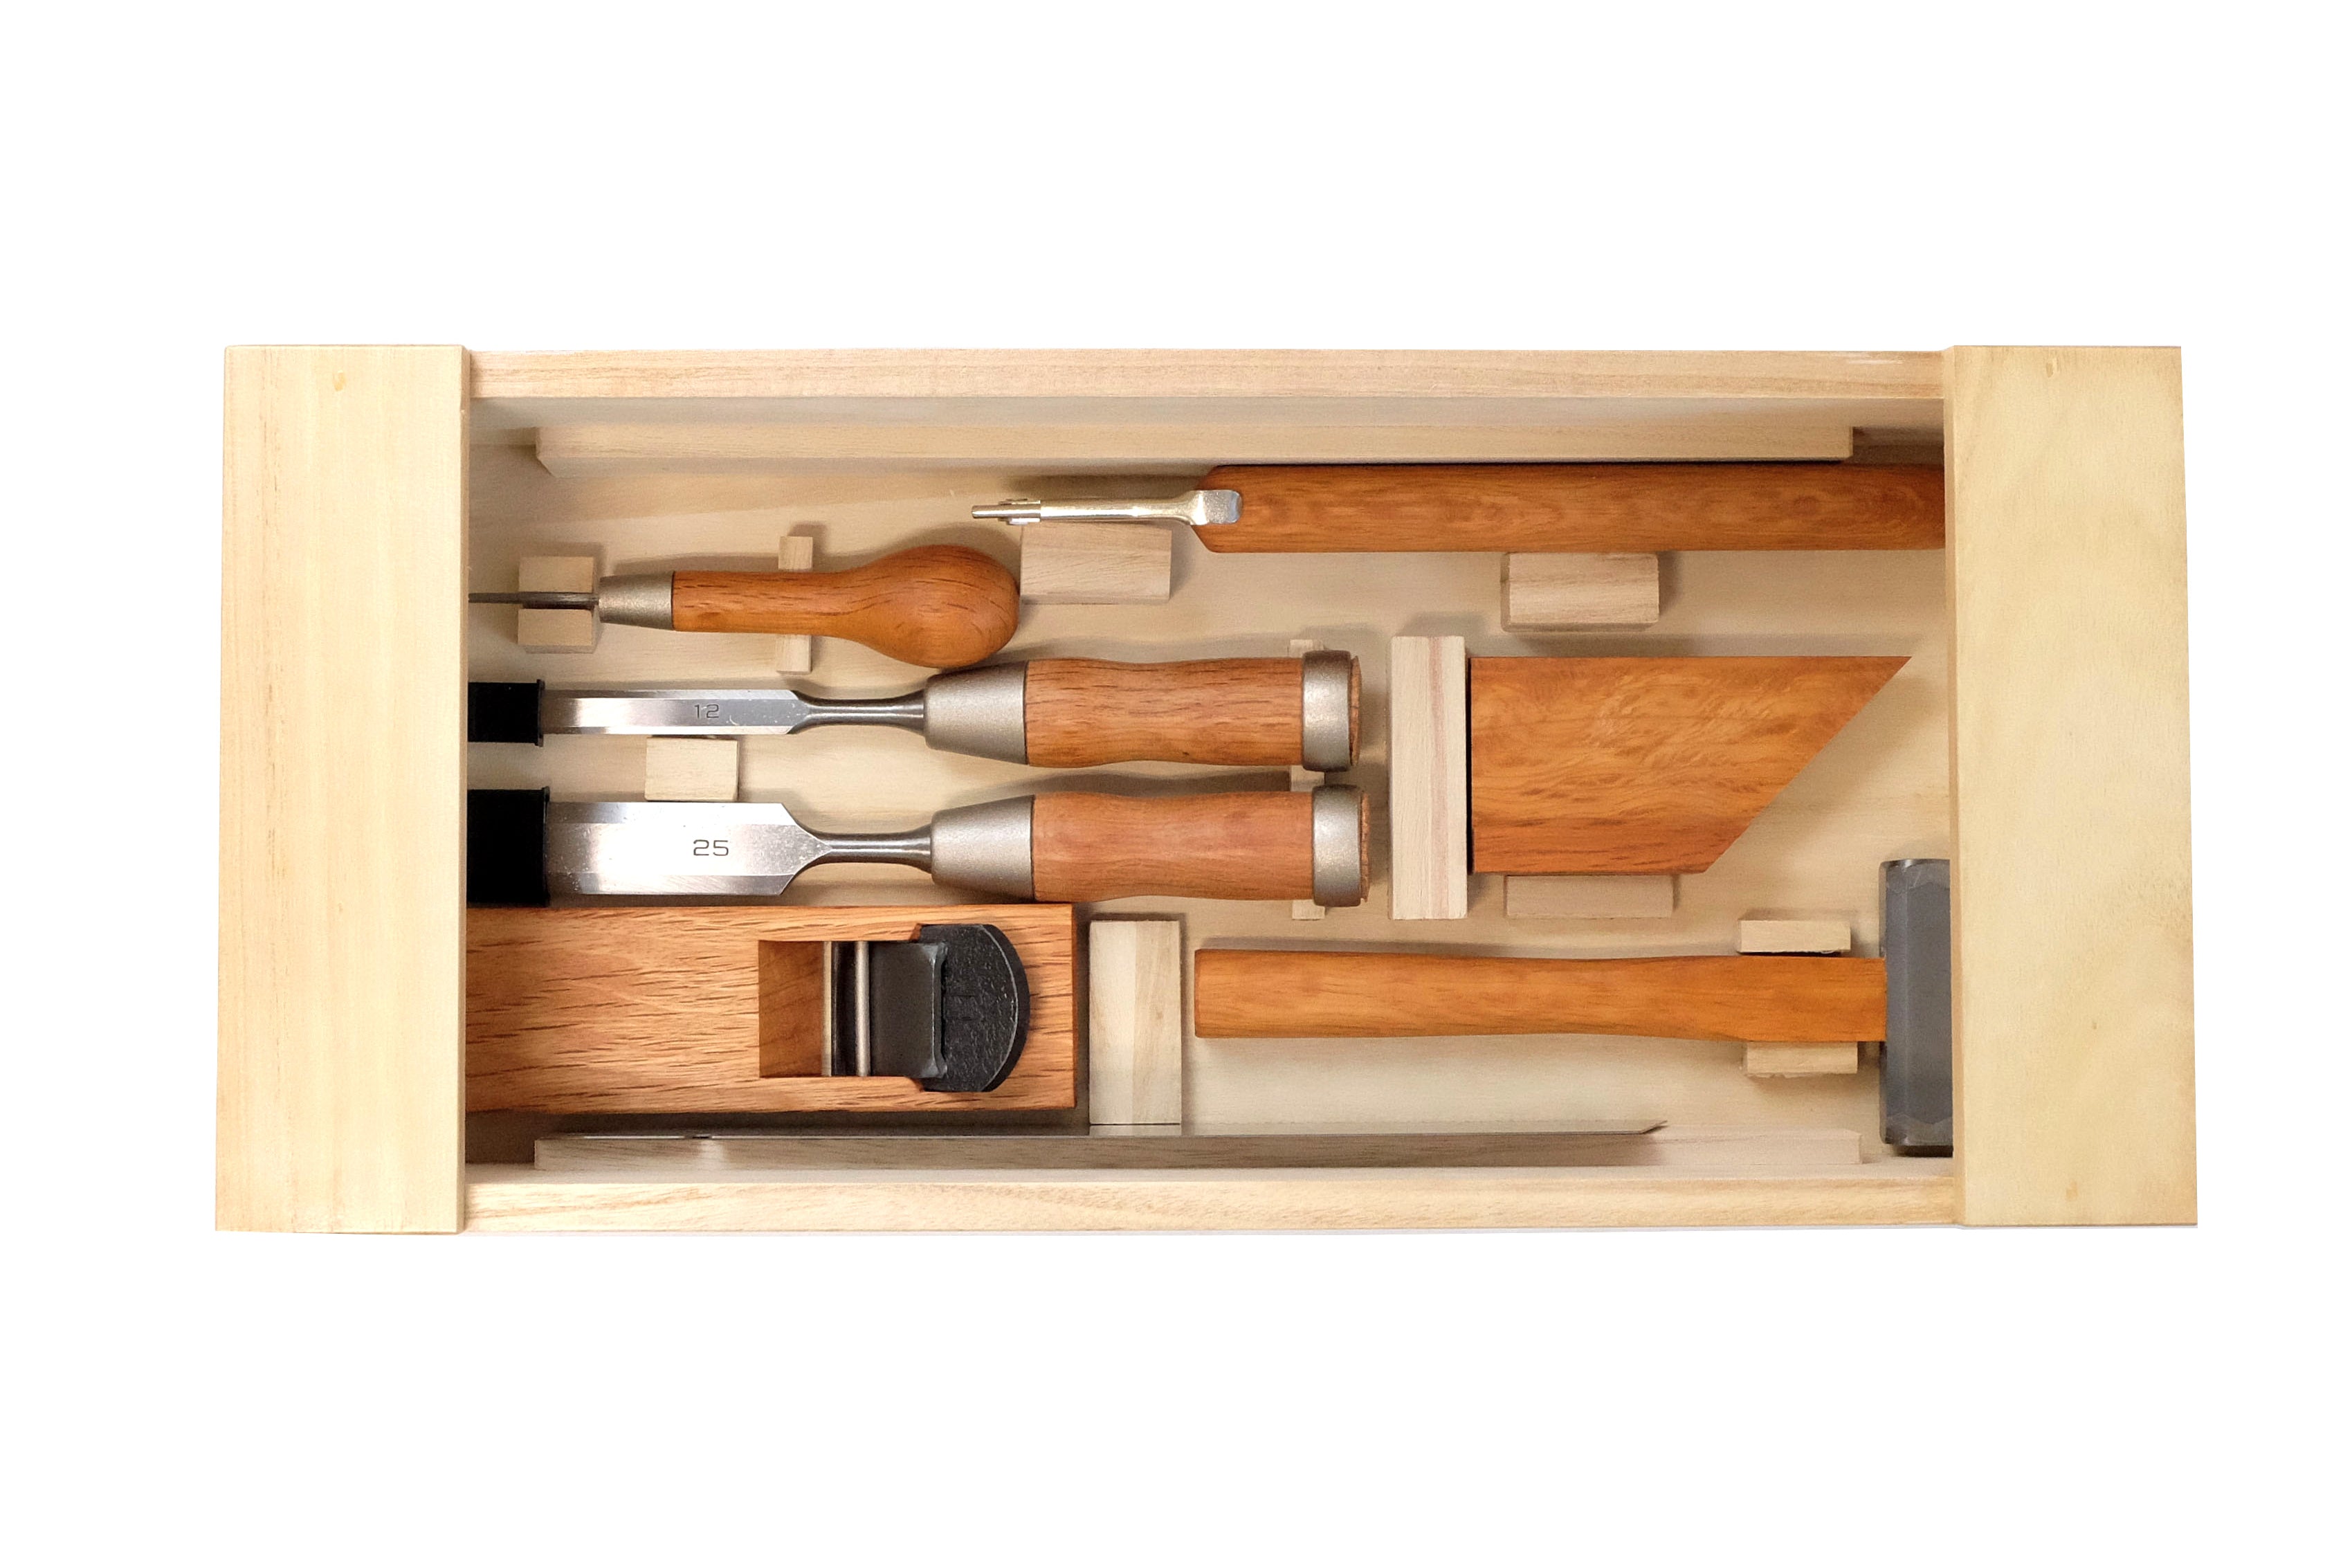 Japanese Wood Working Tools – Yagihana Retail